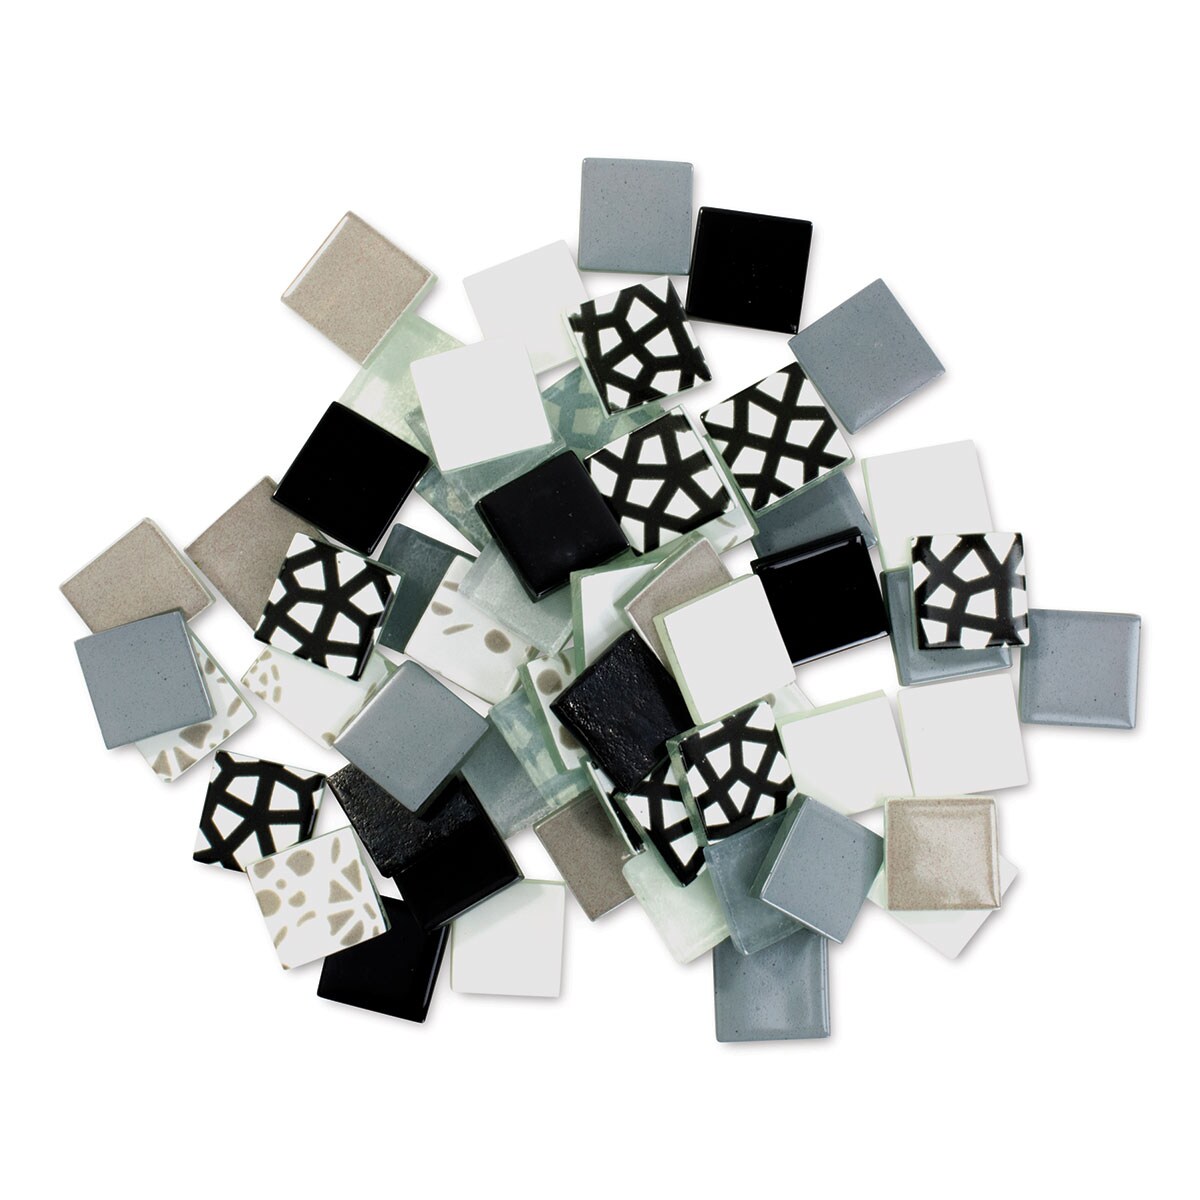 Mosaic Mercantile Patchwork Tiles - Black/Grey, 3 lb